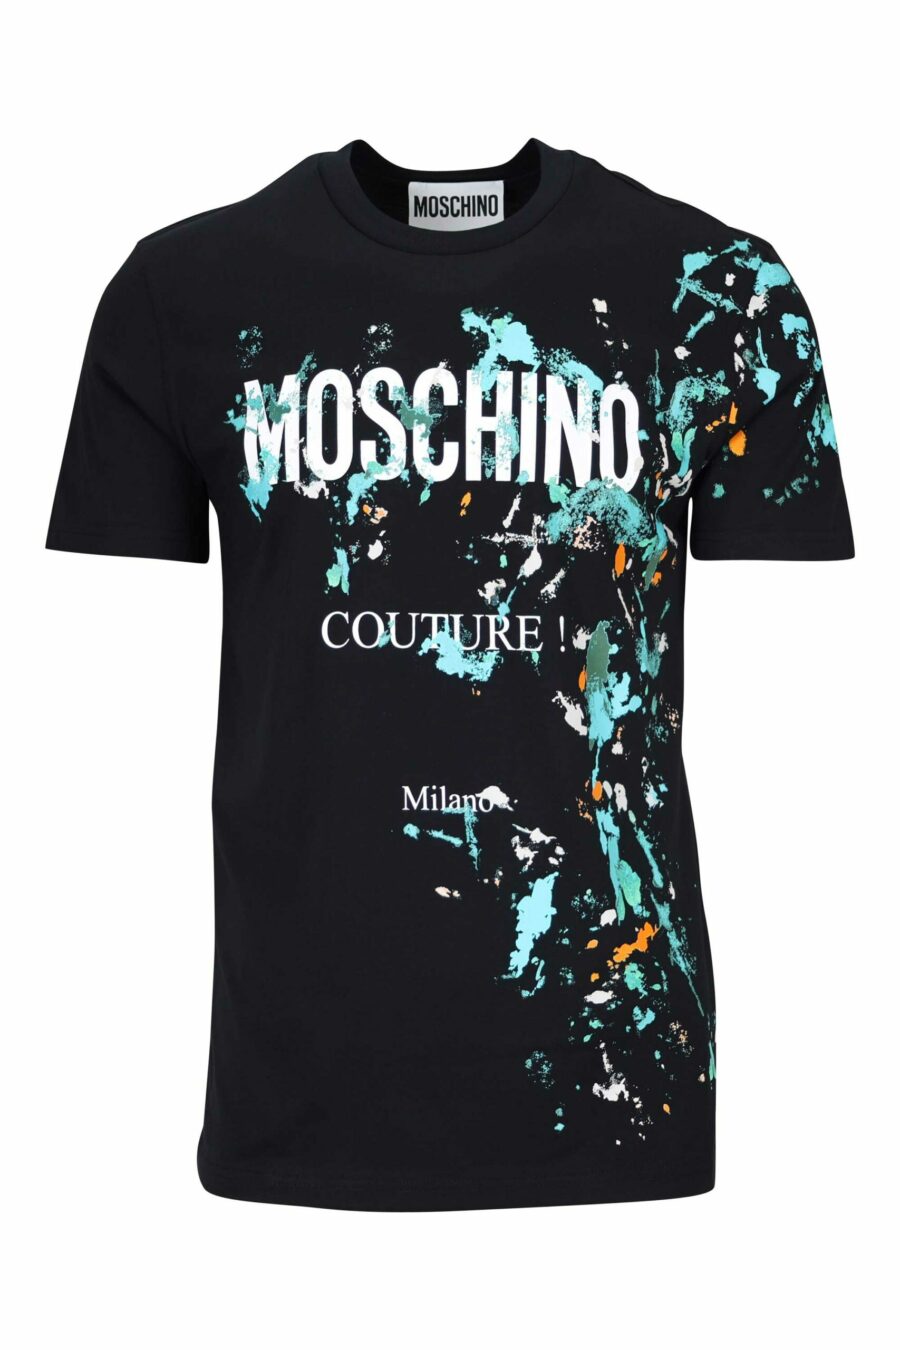 T-shirt preta com maxilogo "couture milano" com "splash" multicolorido - 667113391946 scaled